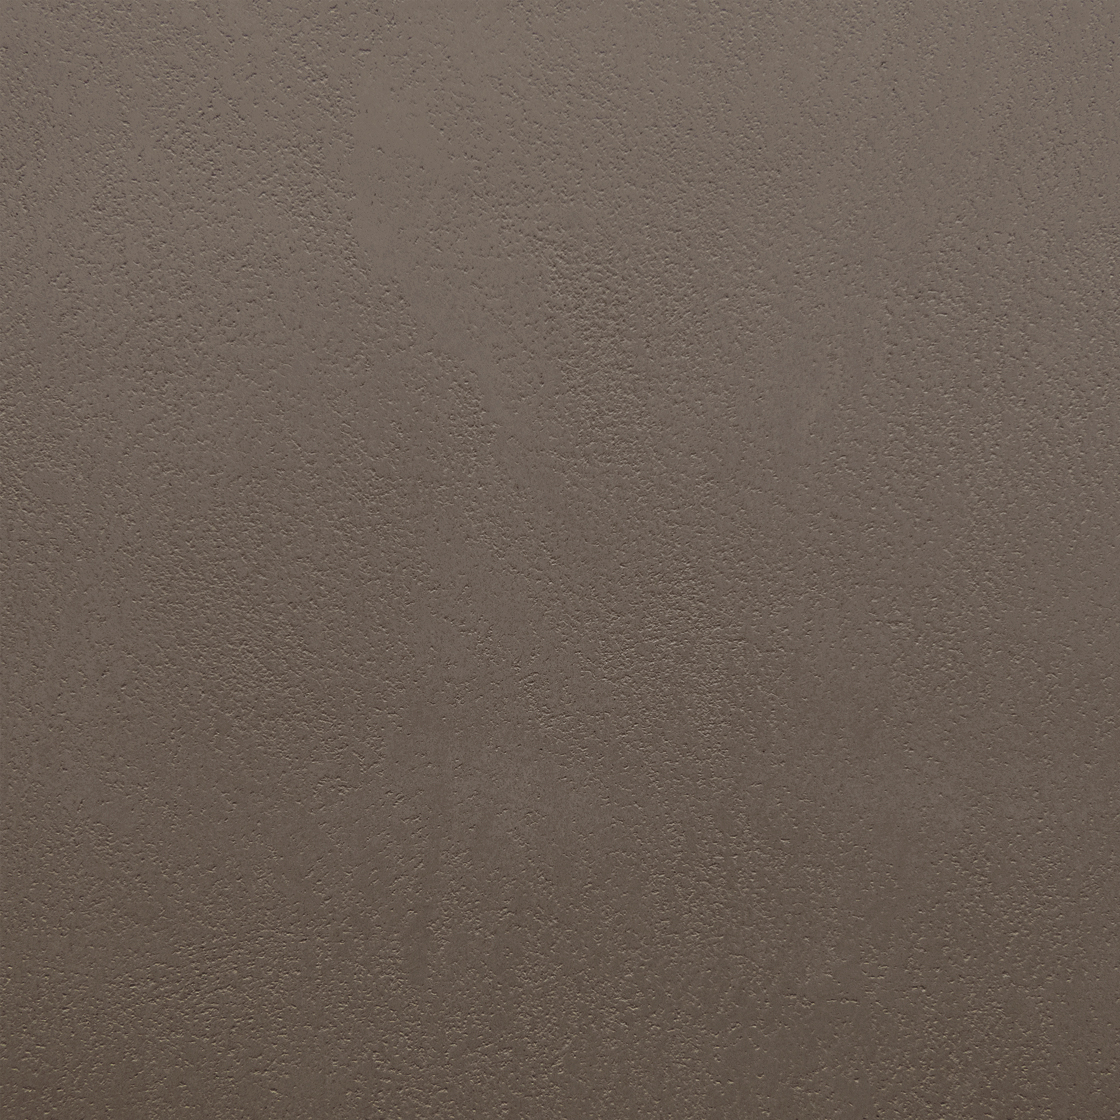 Close up of Armourcoat leatherstone exterior polished plaster finish - 36